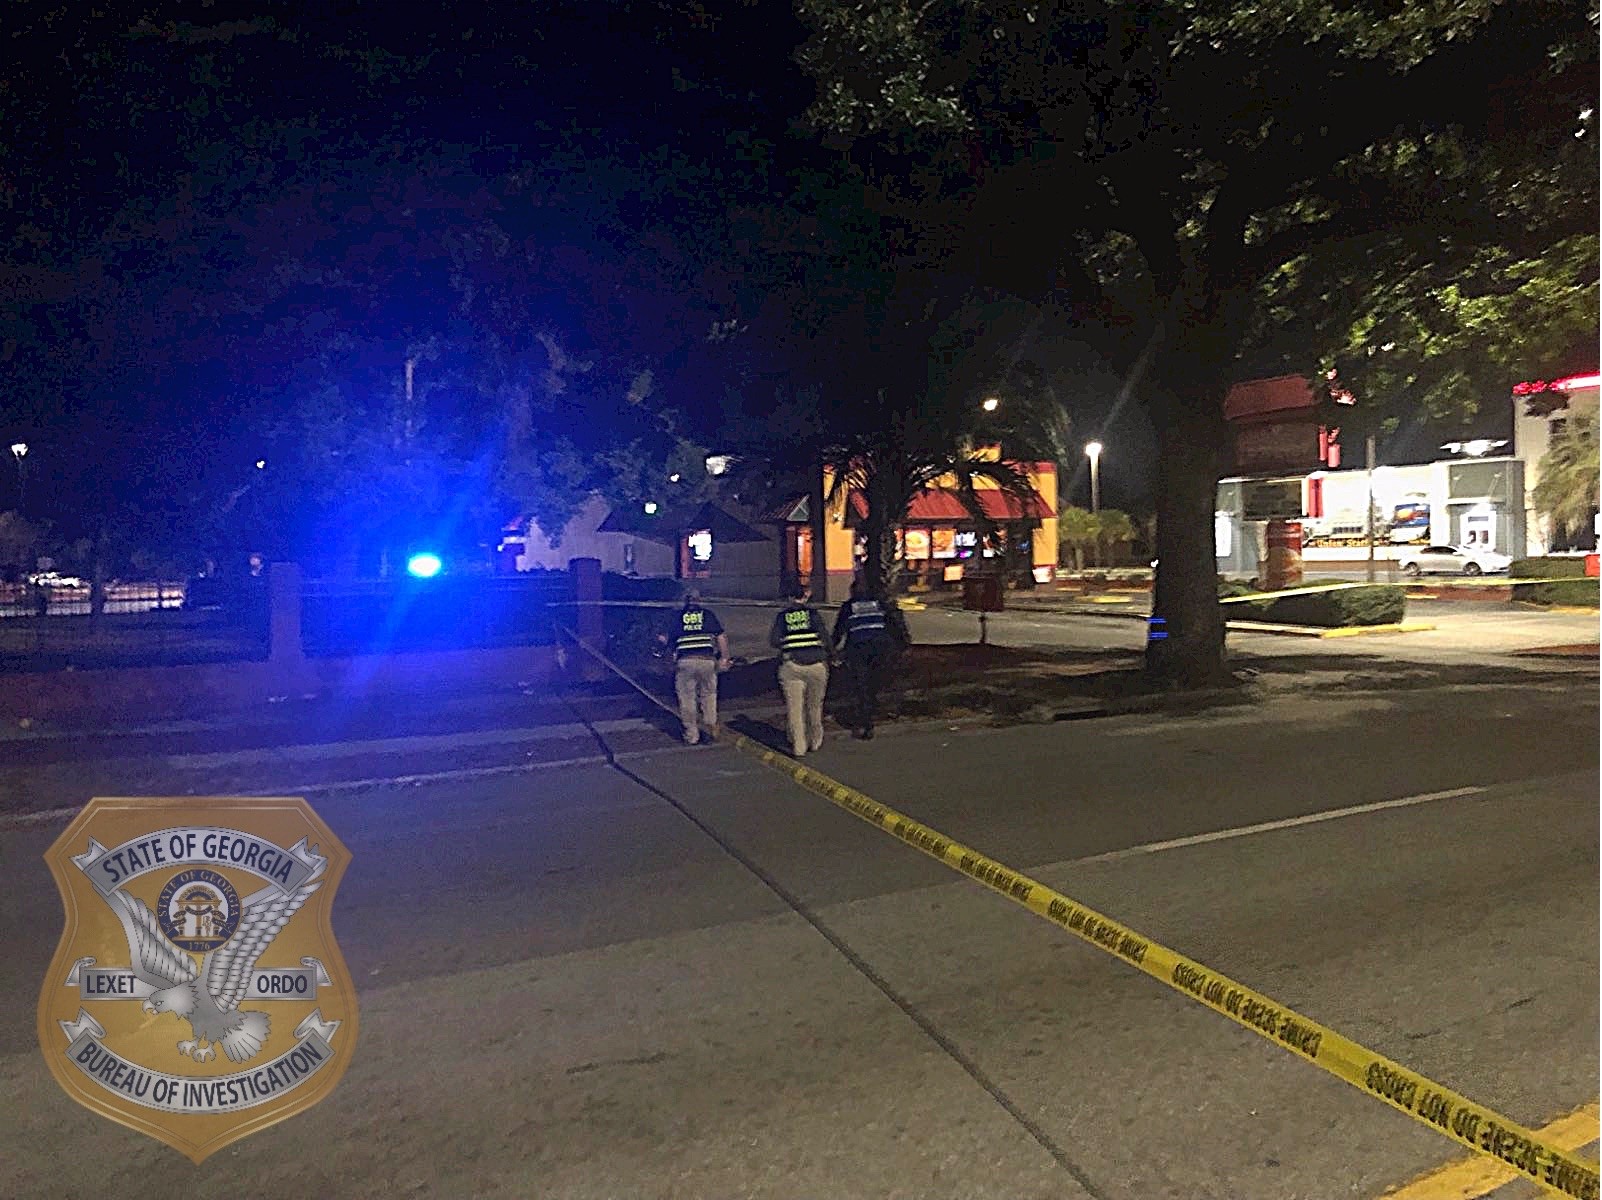 Gbi Investigates Officer Involved Shooting In Savannah Georgia Bureau Of Investigation